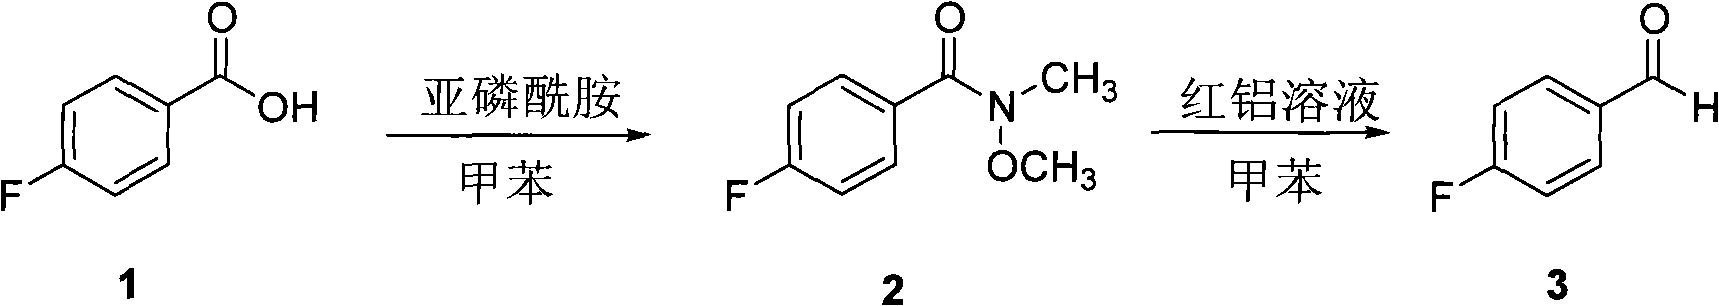 Method for preparing p-fluorobenzaldehyde